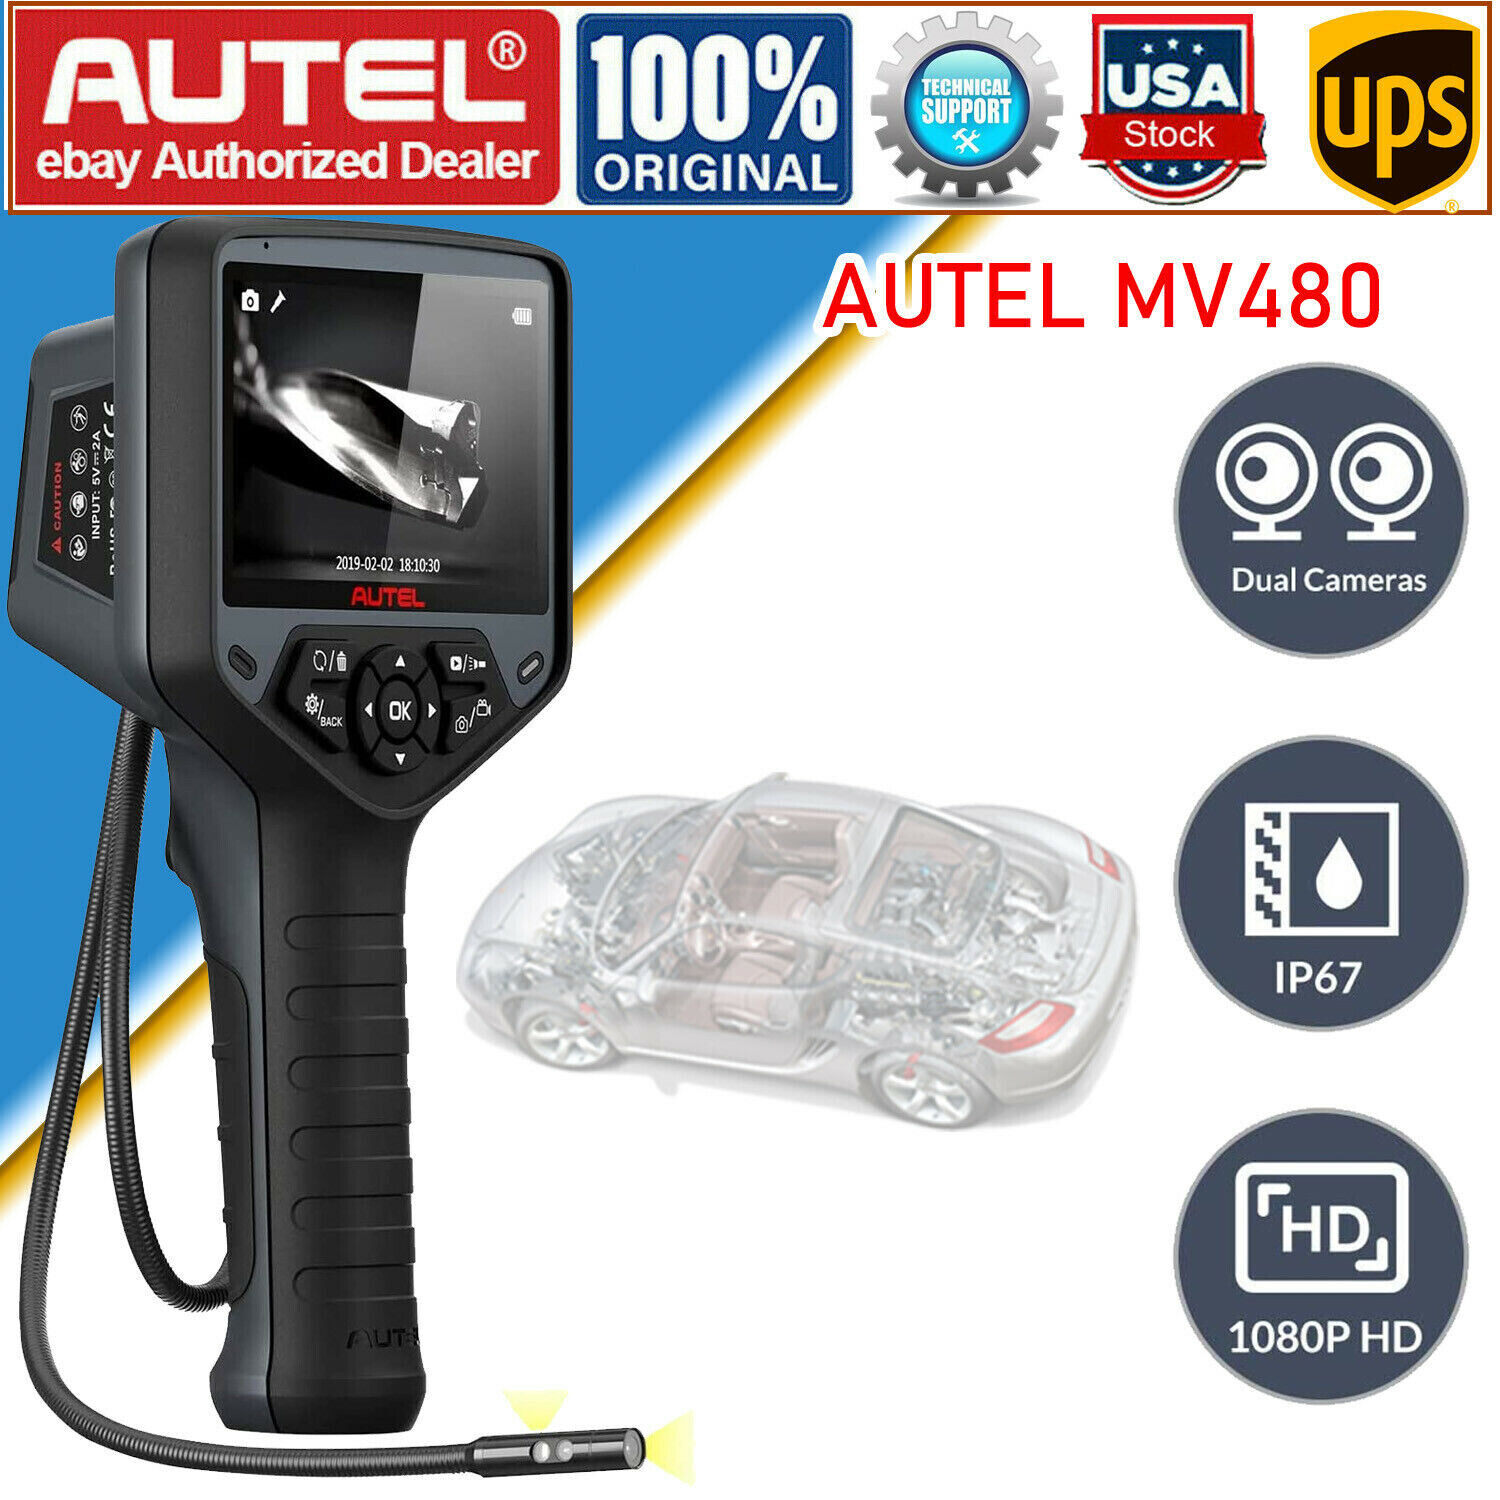 Autel MaxiVideo MV480 Inspection Dual Camera 1080P HD Industrial Endoscope Video